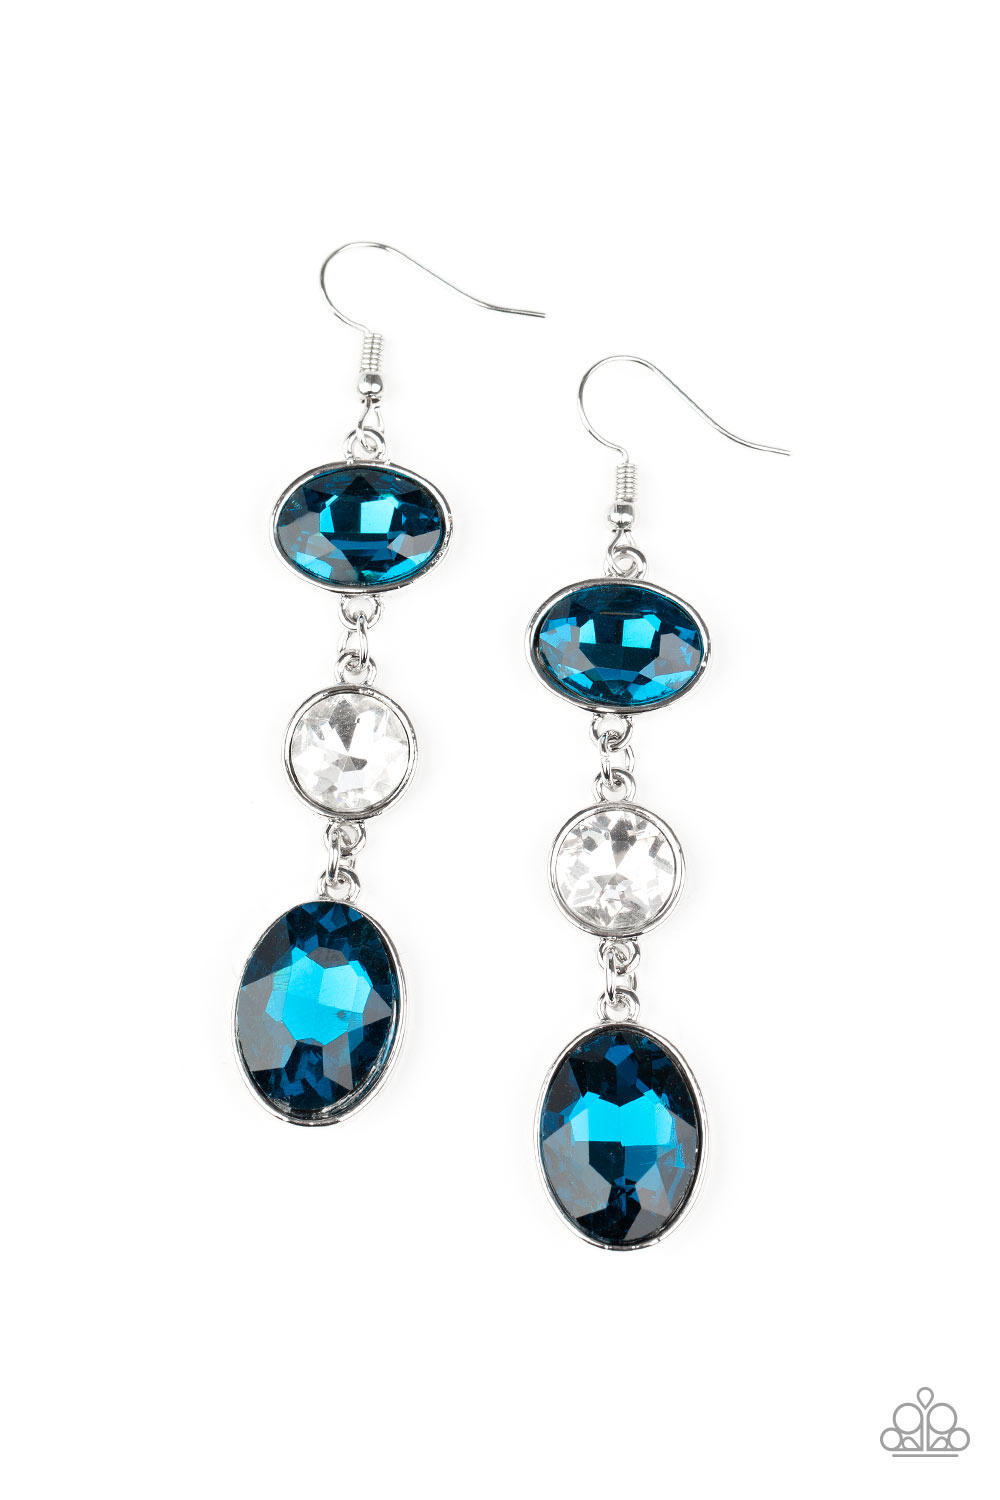 Silver Dangle earrings - Paparazzi The GLOW Must Go On! - Blue Earrings Paparazzi jewelry image